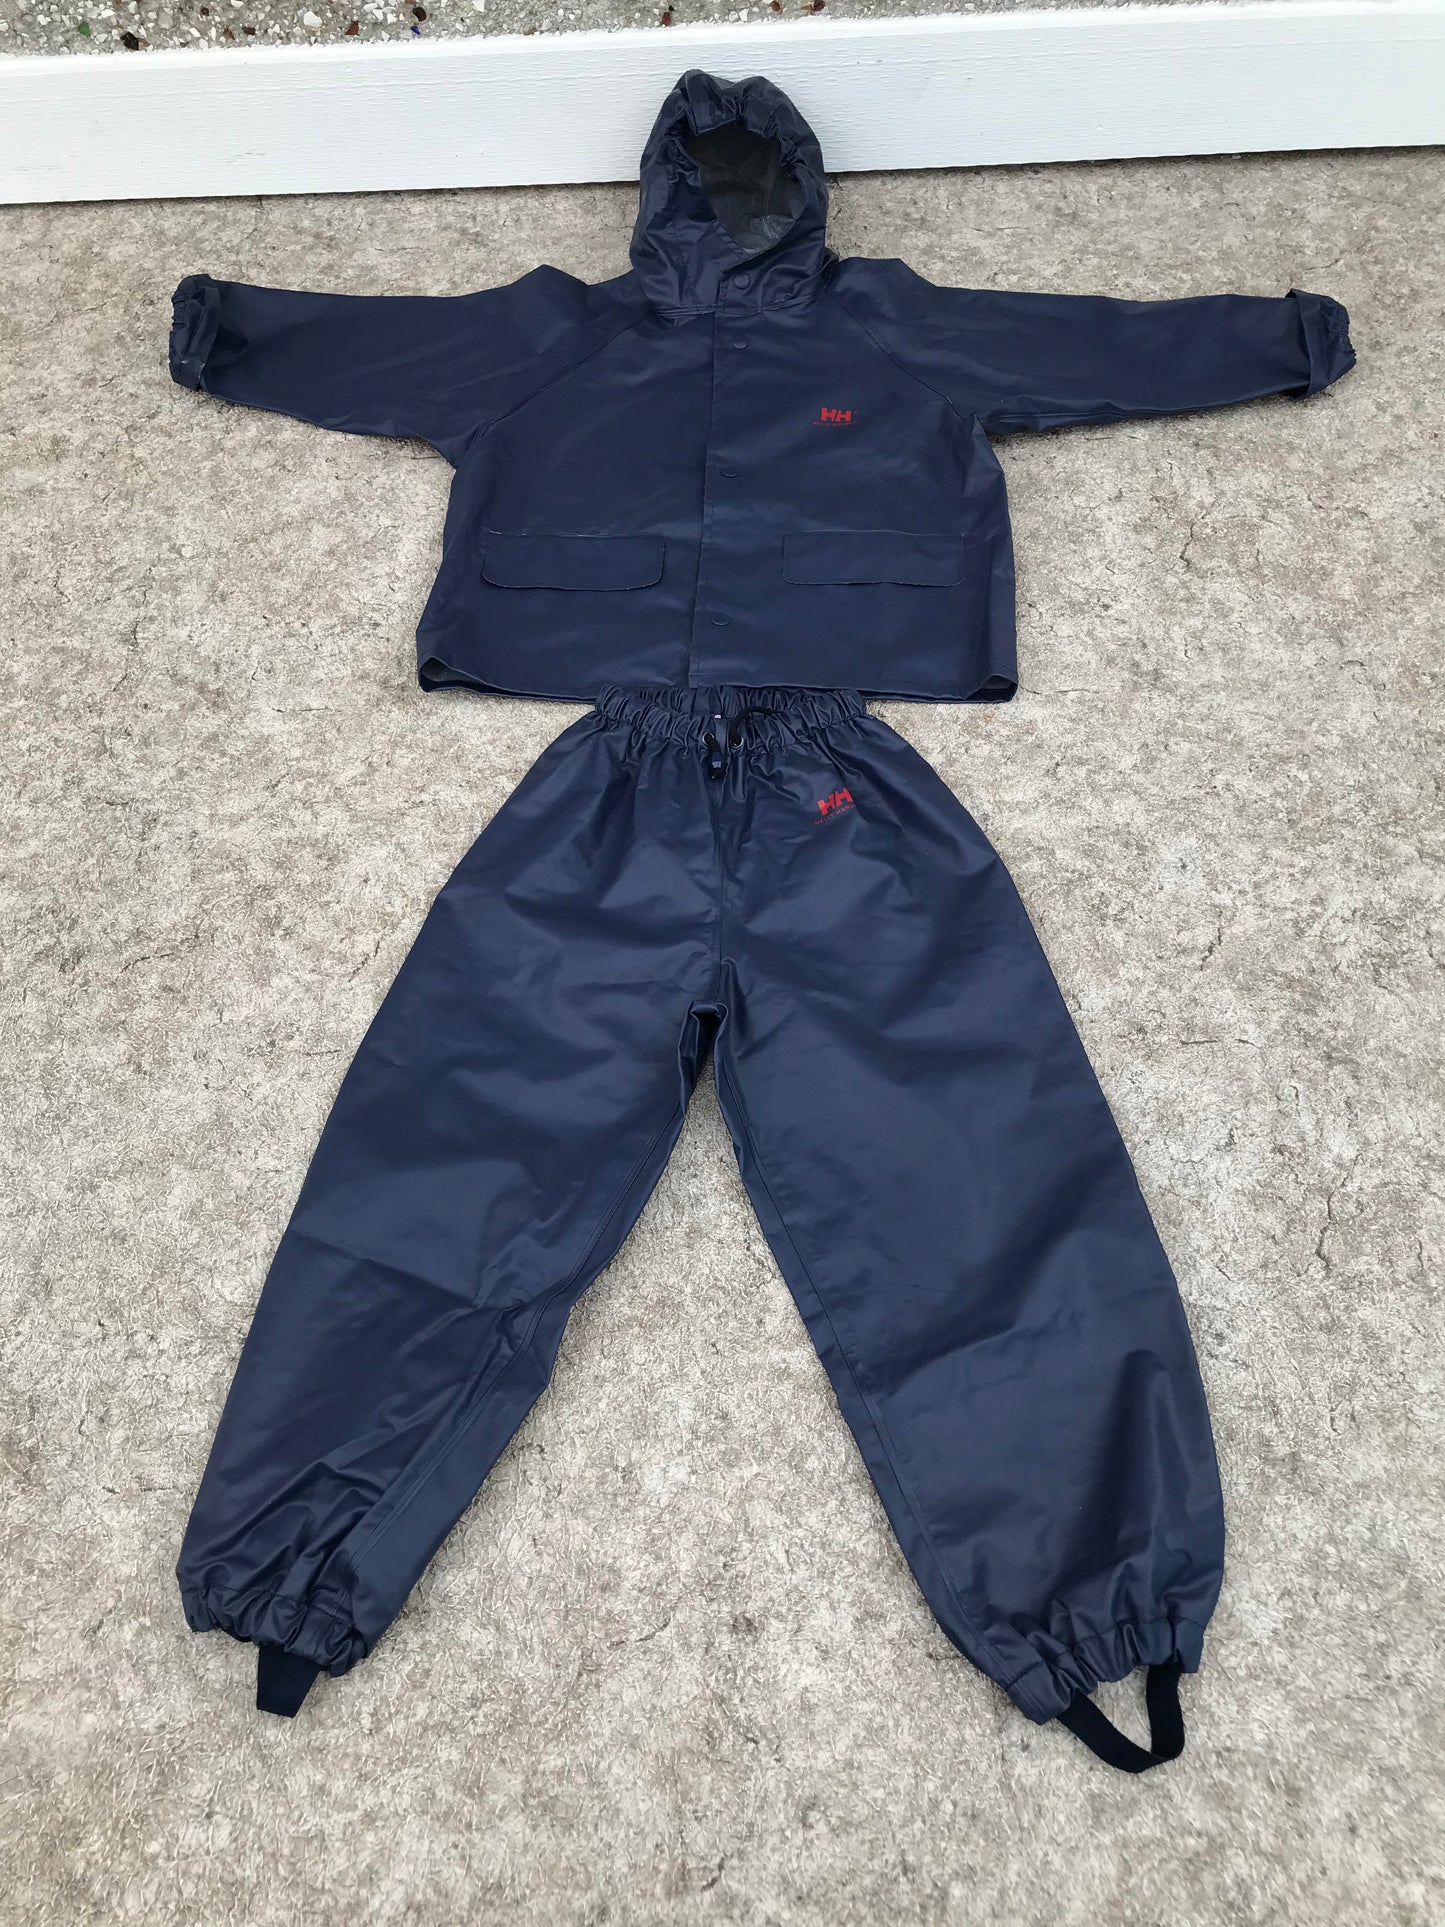 Rain Coat Child Size 6 and Pants Helly Hansen Waterproof Heavy  Duty Rain Gear Navy As New